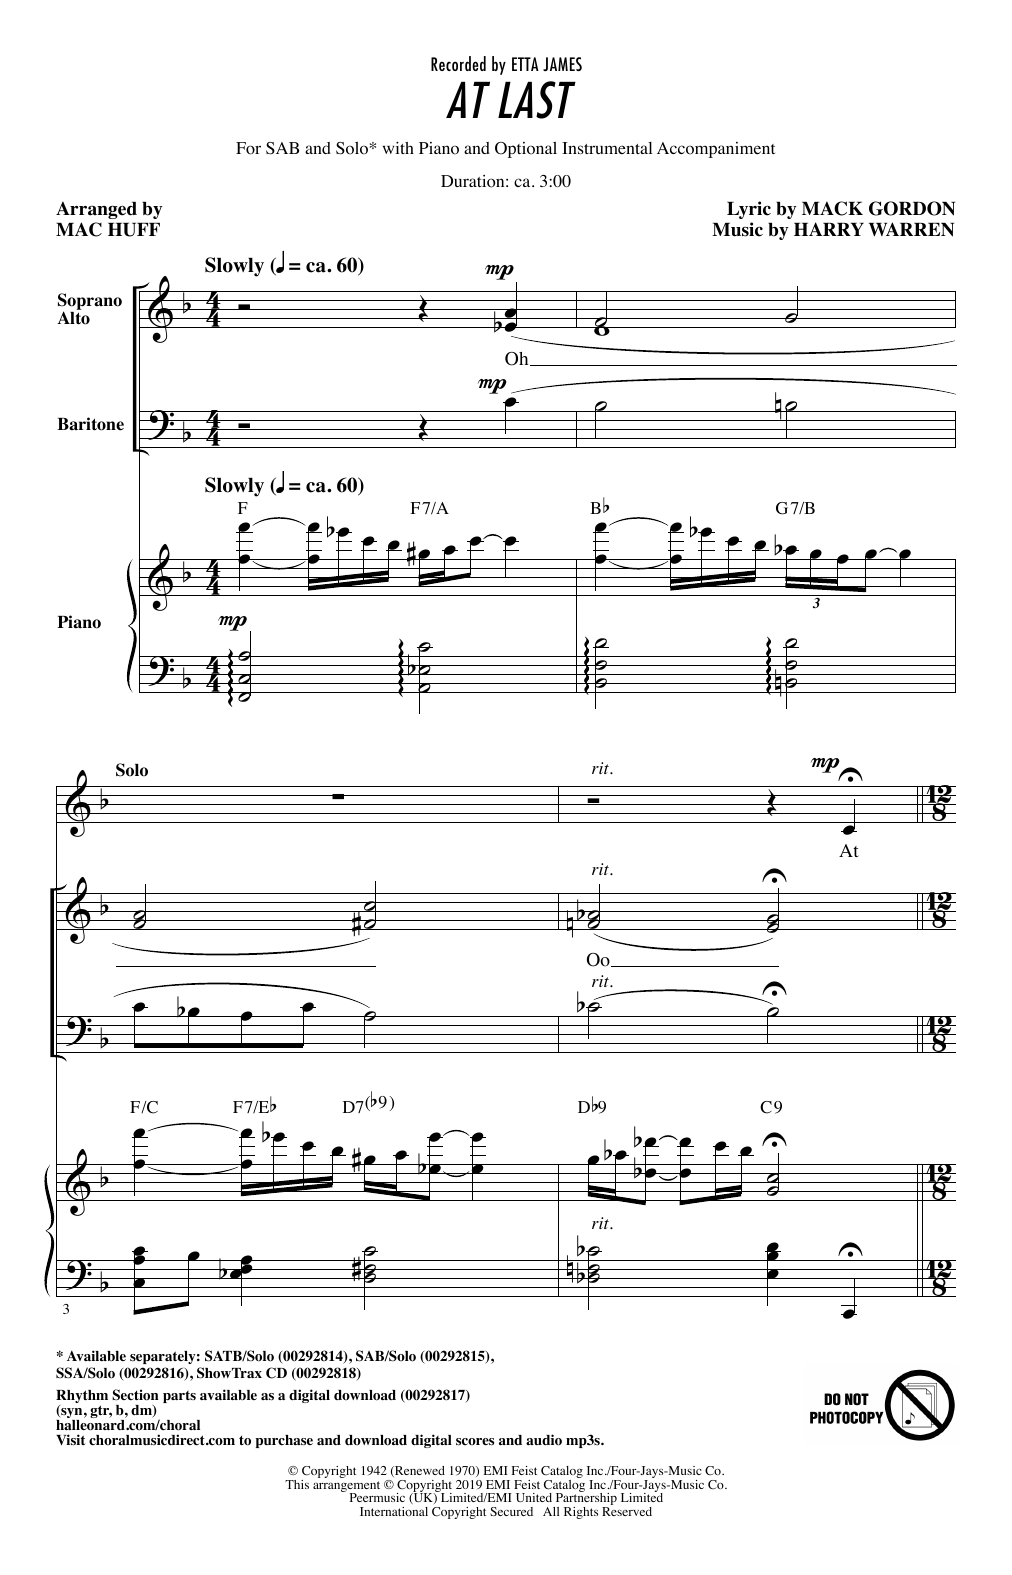 Etta James At Last (arr. Mac Huff) Sheet Music Notes & Chords for SATB Choir - Download or Print PDF